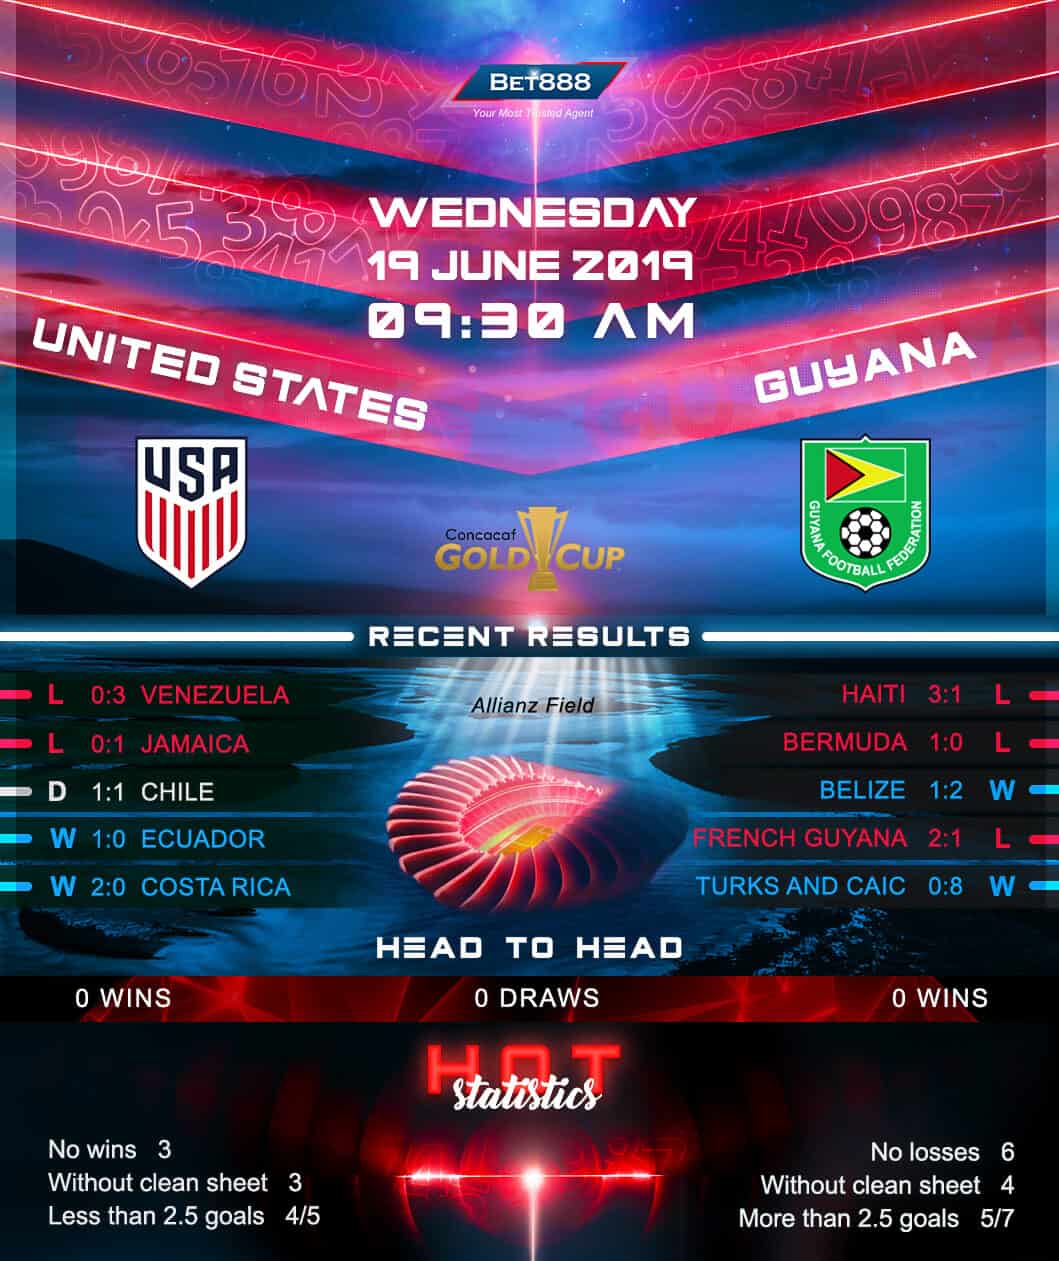 United States vs Guyana﻿ 19/06/19